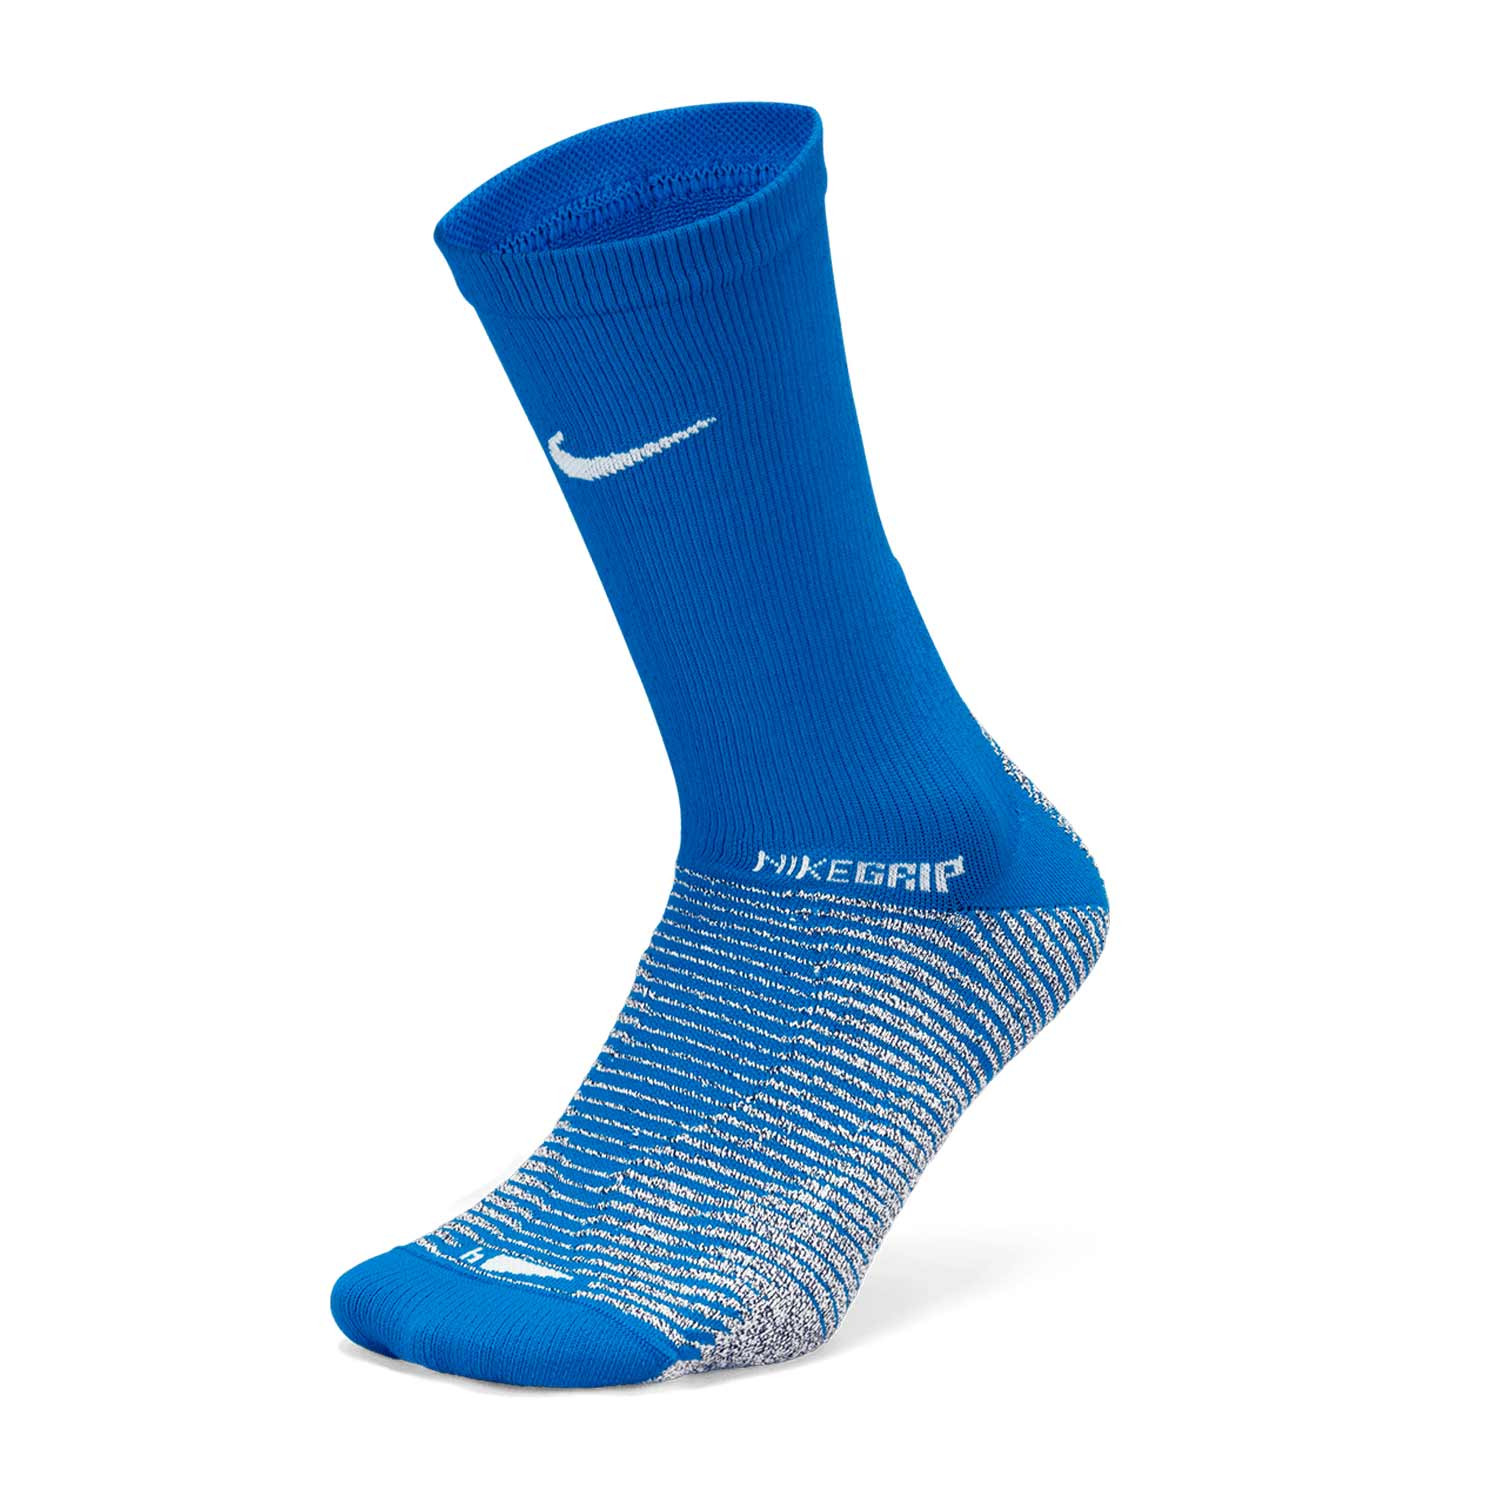 Calcetines Nike Grip Strike azules futbolmania